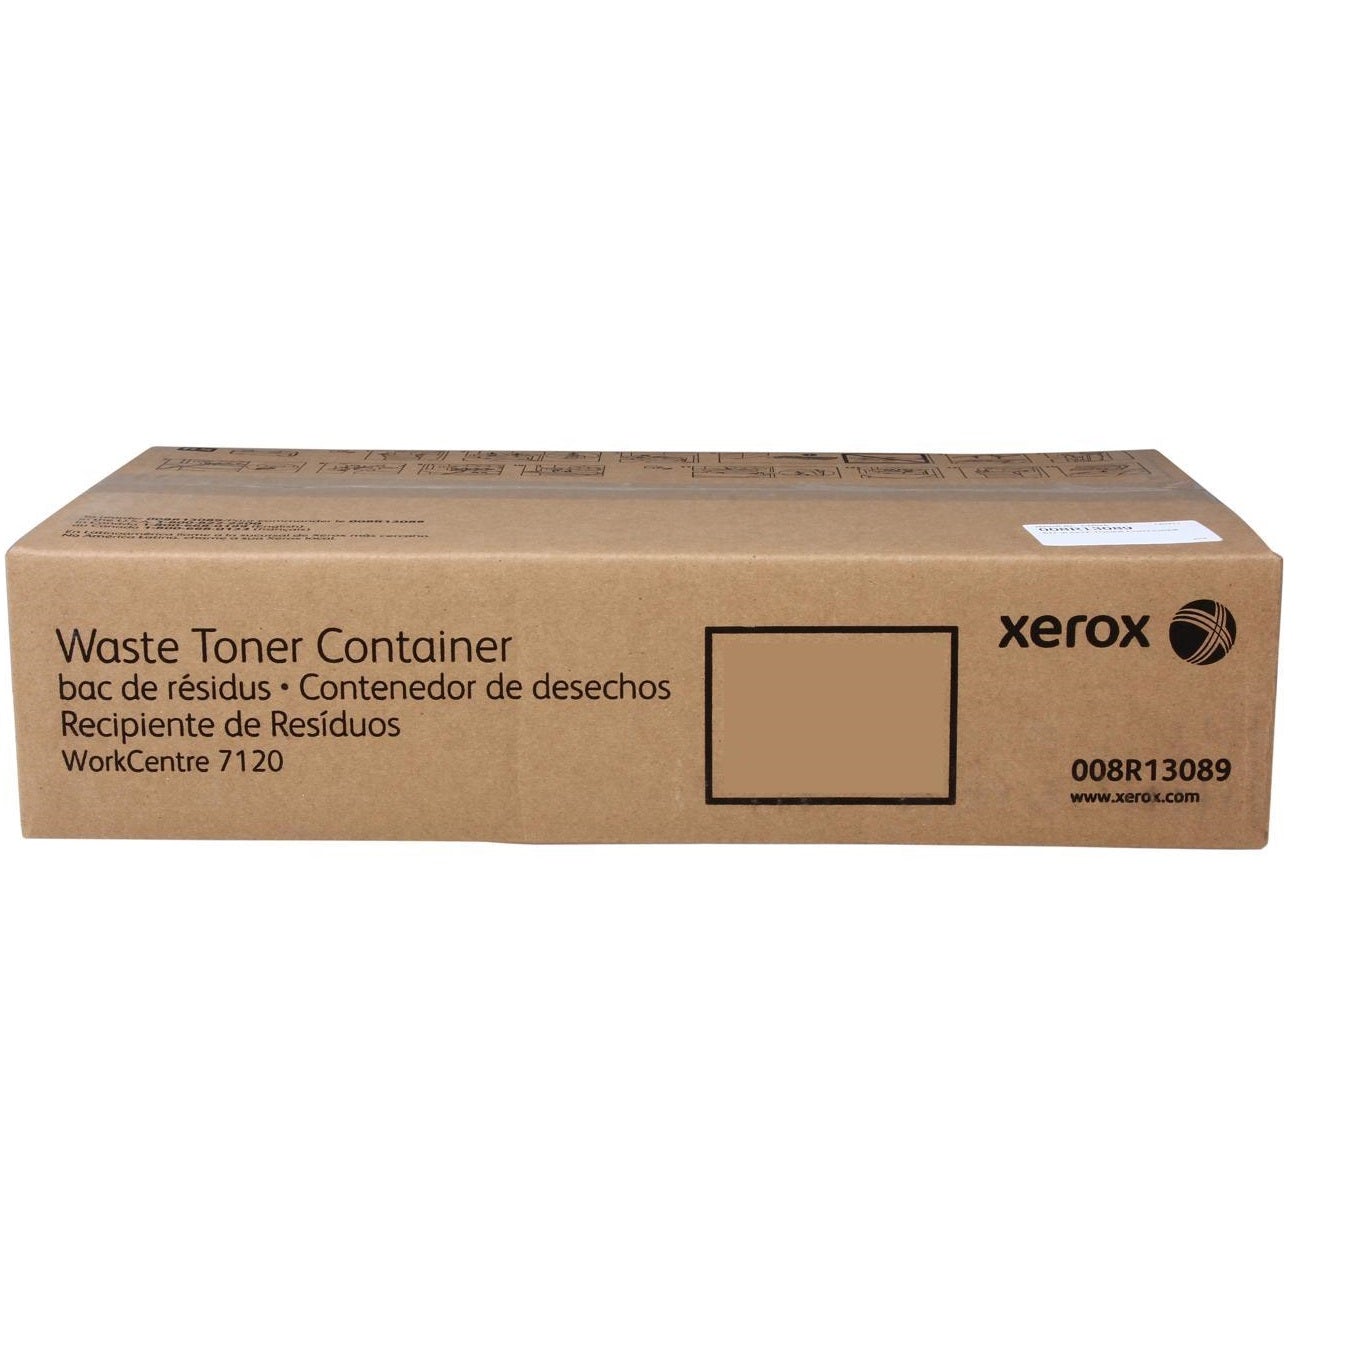 Absolute Toner Xerox 008R13089 Genuine OEM Waste Toner Container for WorkCentre 7125, 7225 Original Xerox Cartridges